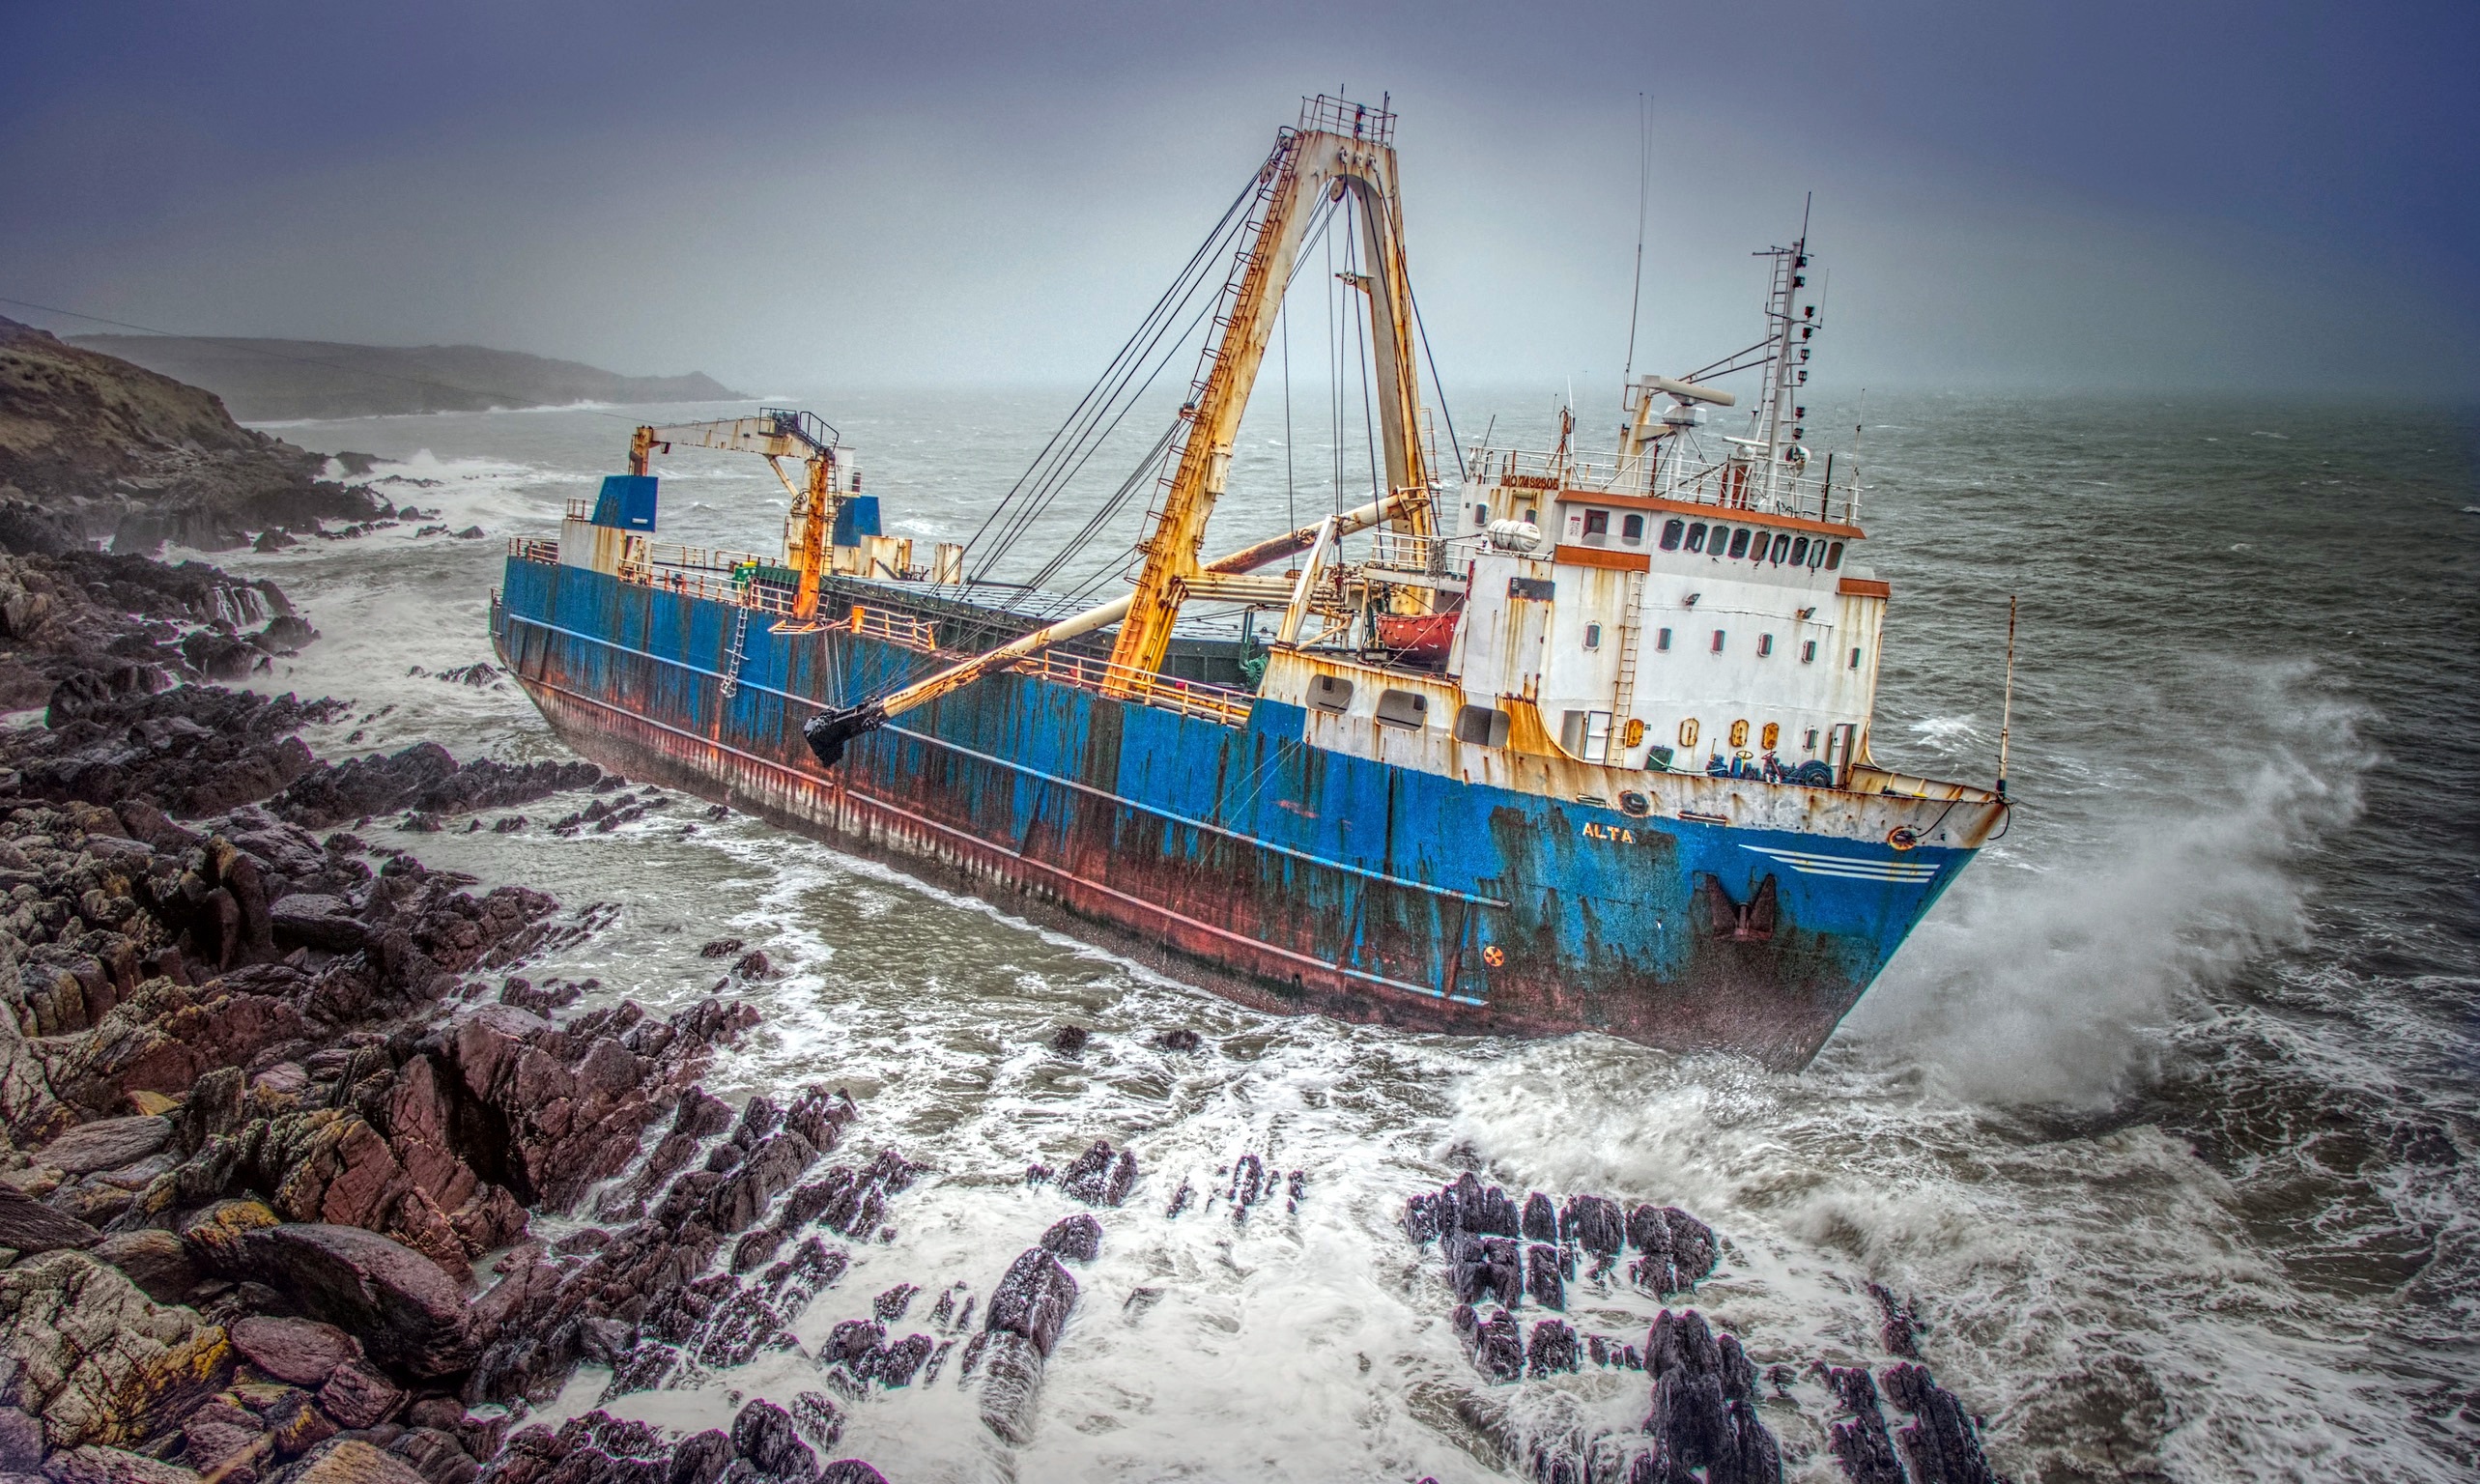 MV Alta shipwrecked off the Ballycotton coast color